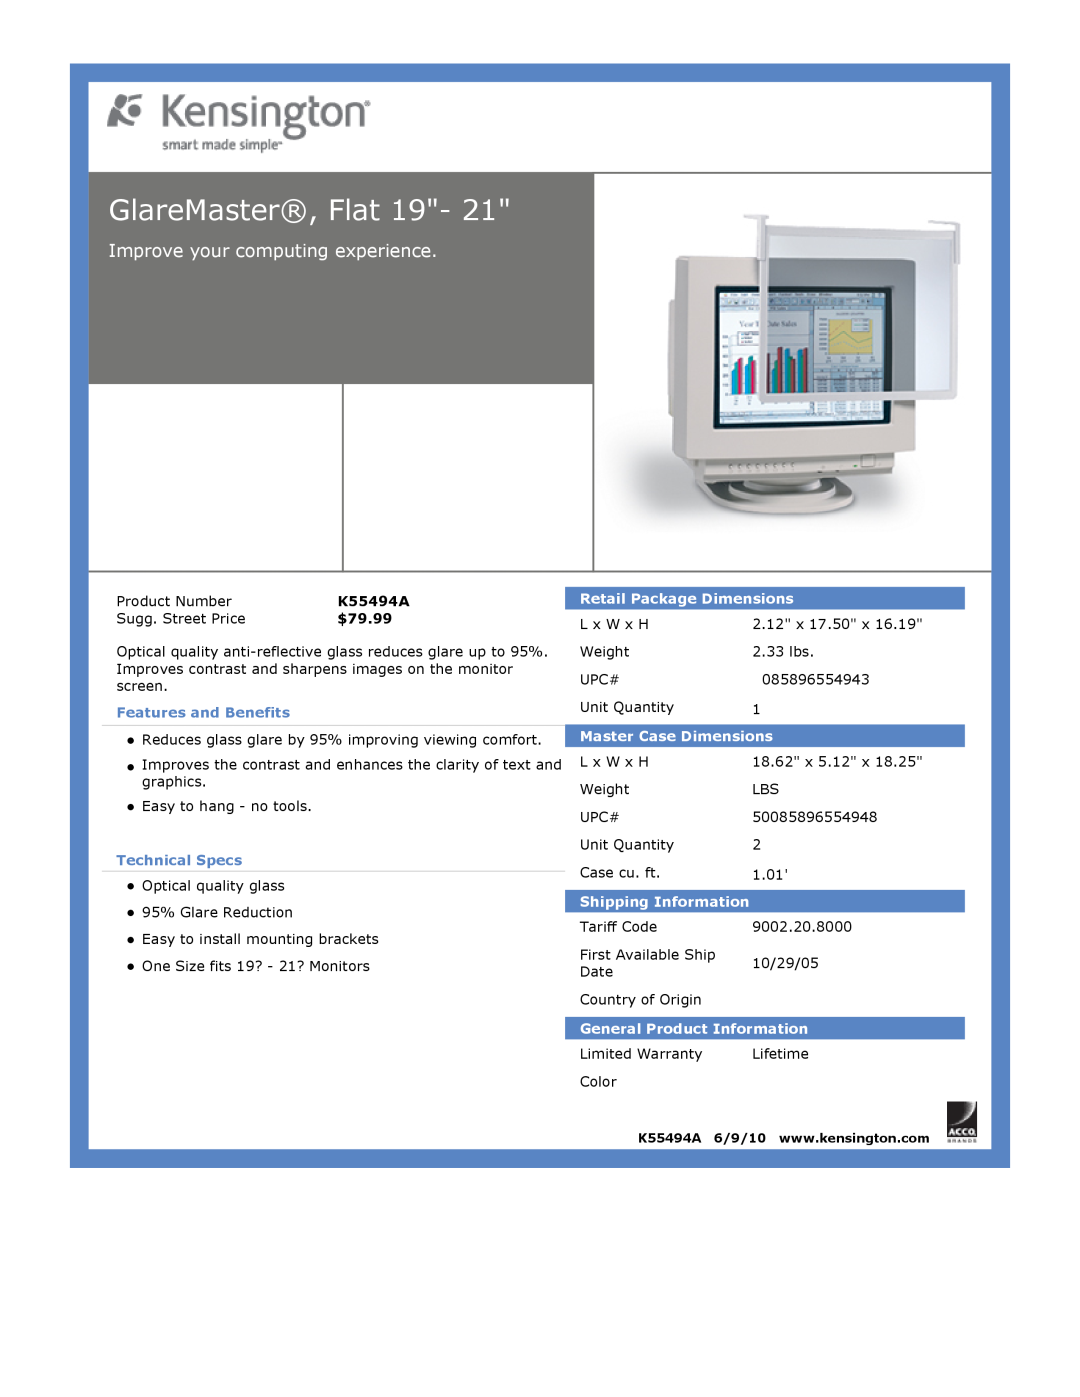 Kensington EU64325 GlareMaster, Flat 19, Improve your computing experience, $79.99, Features and Benefits, Technical Specs 